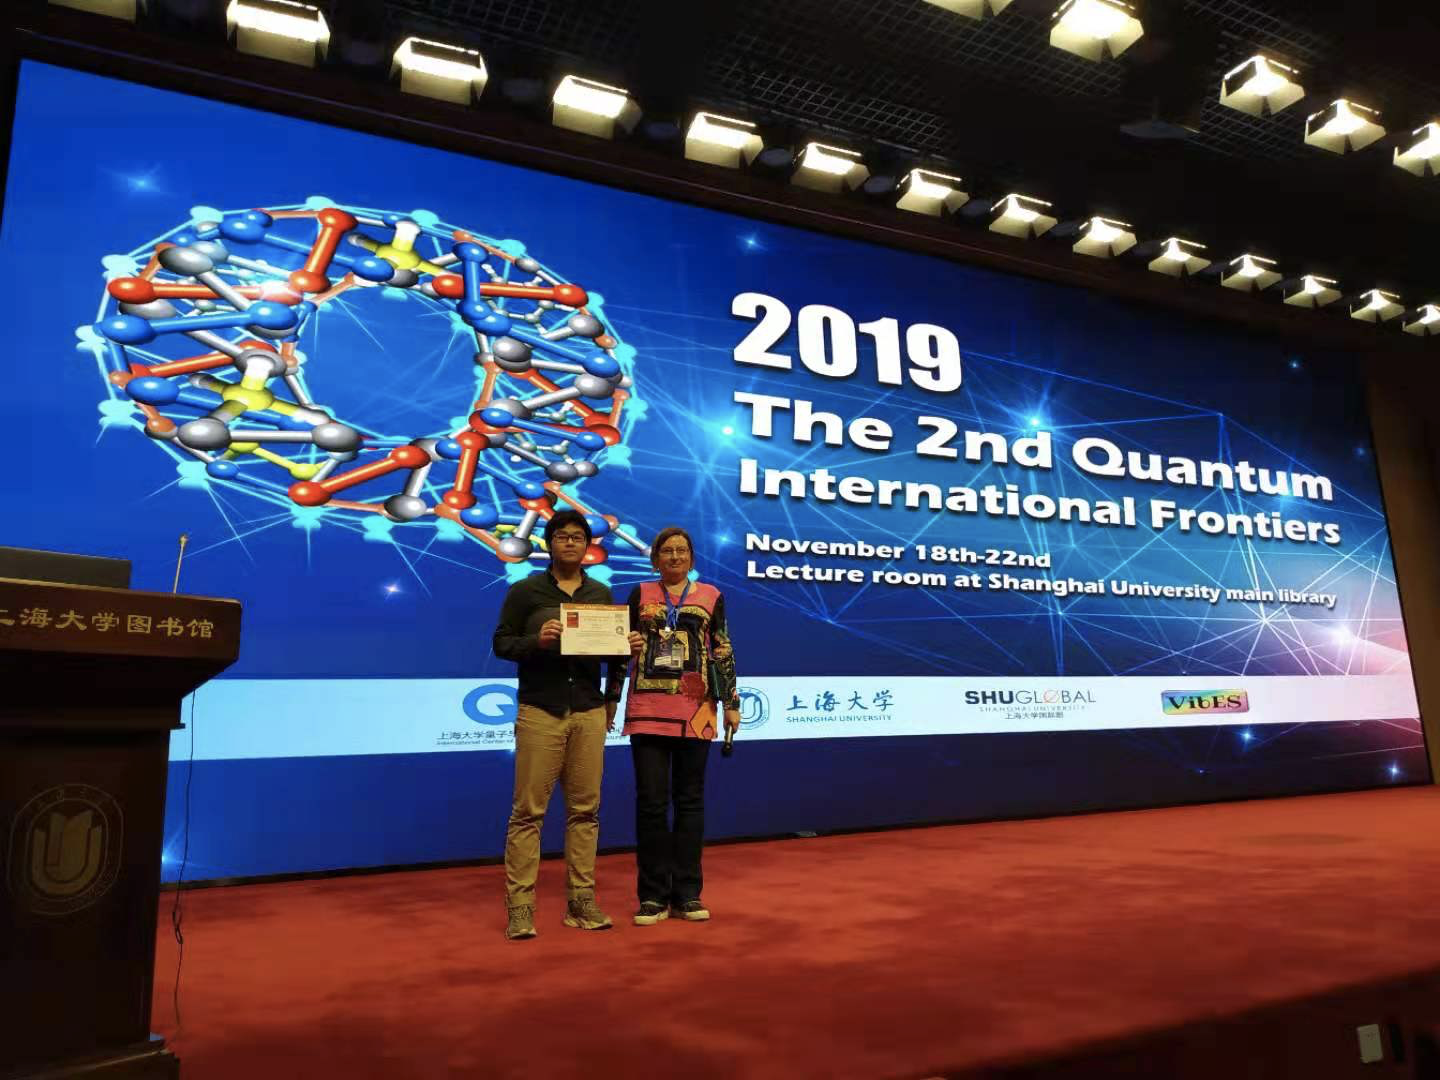 Li Xingpin received the award from Physics Professor Malgozata Biczysko at Shanghai University